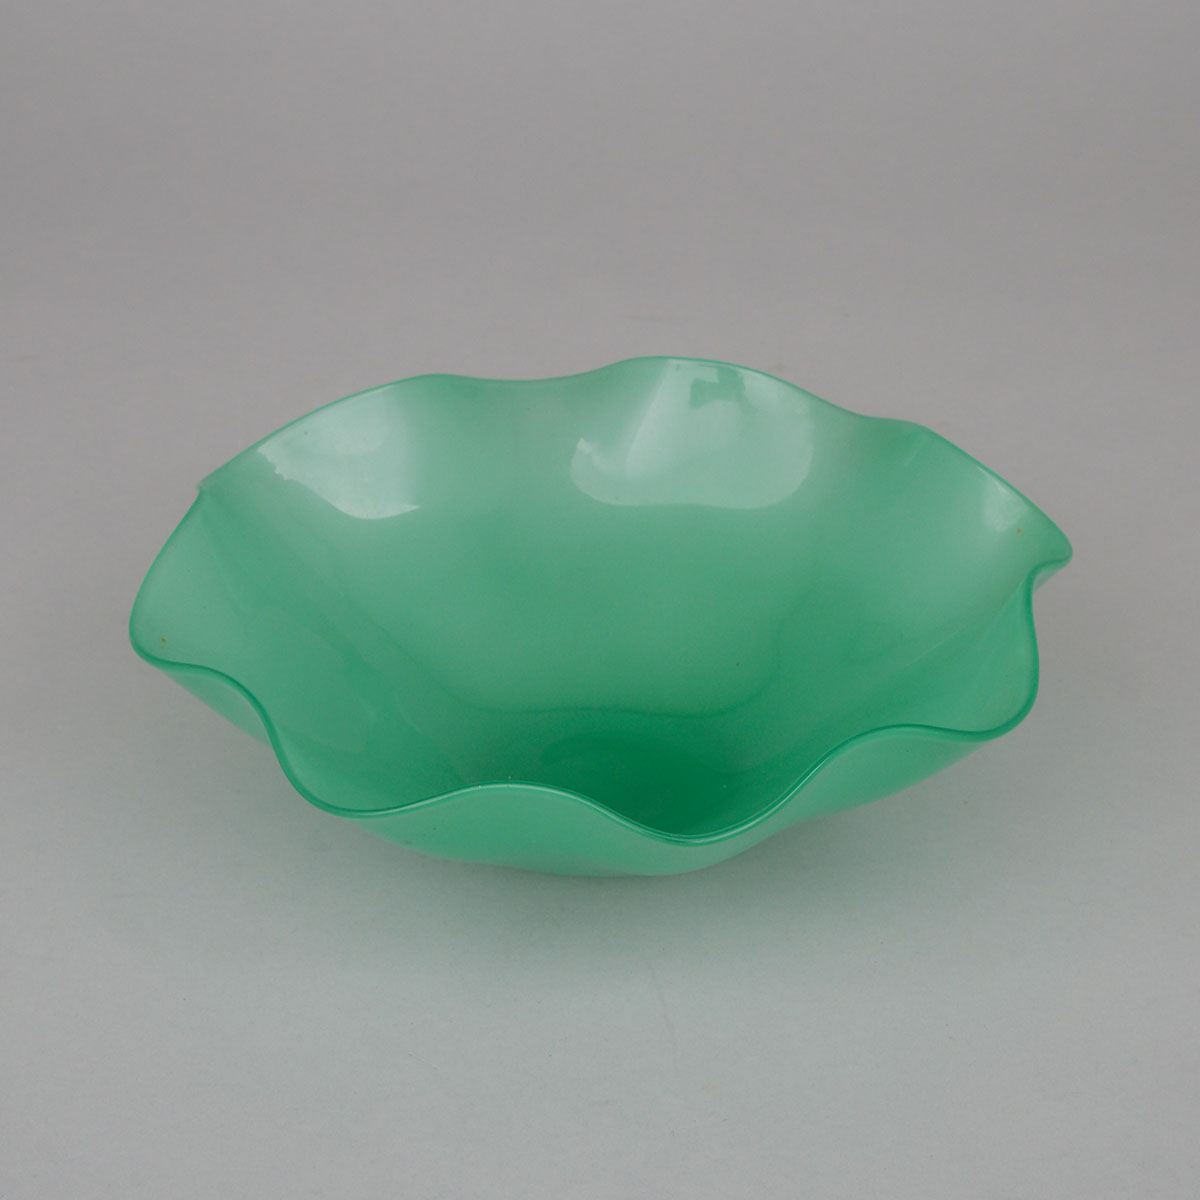 Orrefors 'Kantara' Opaque Green Glass Bowl, Sven Palmqvist, mid-20th century